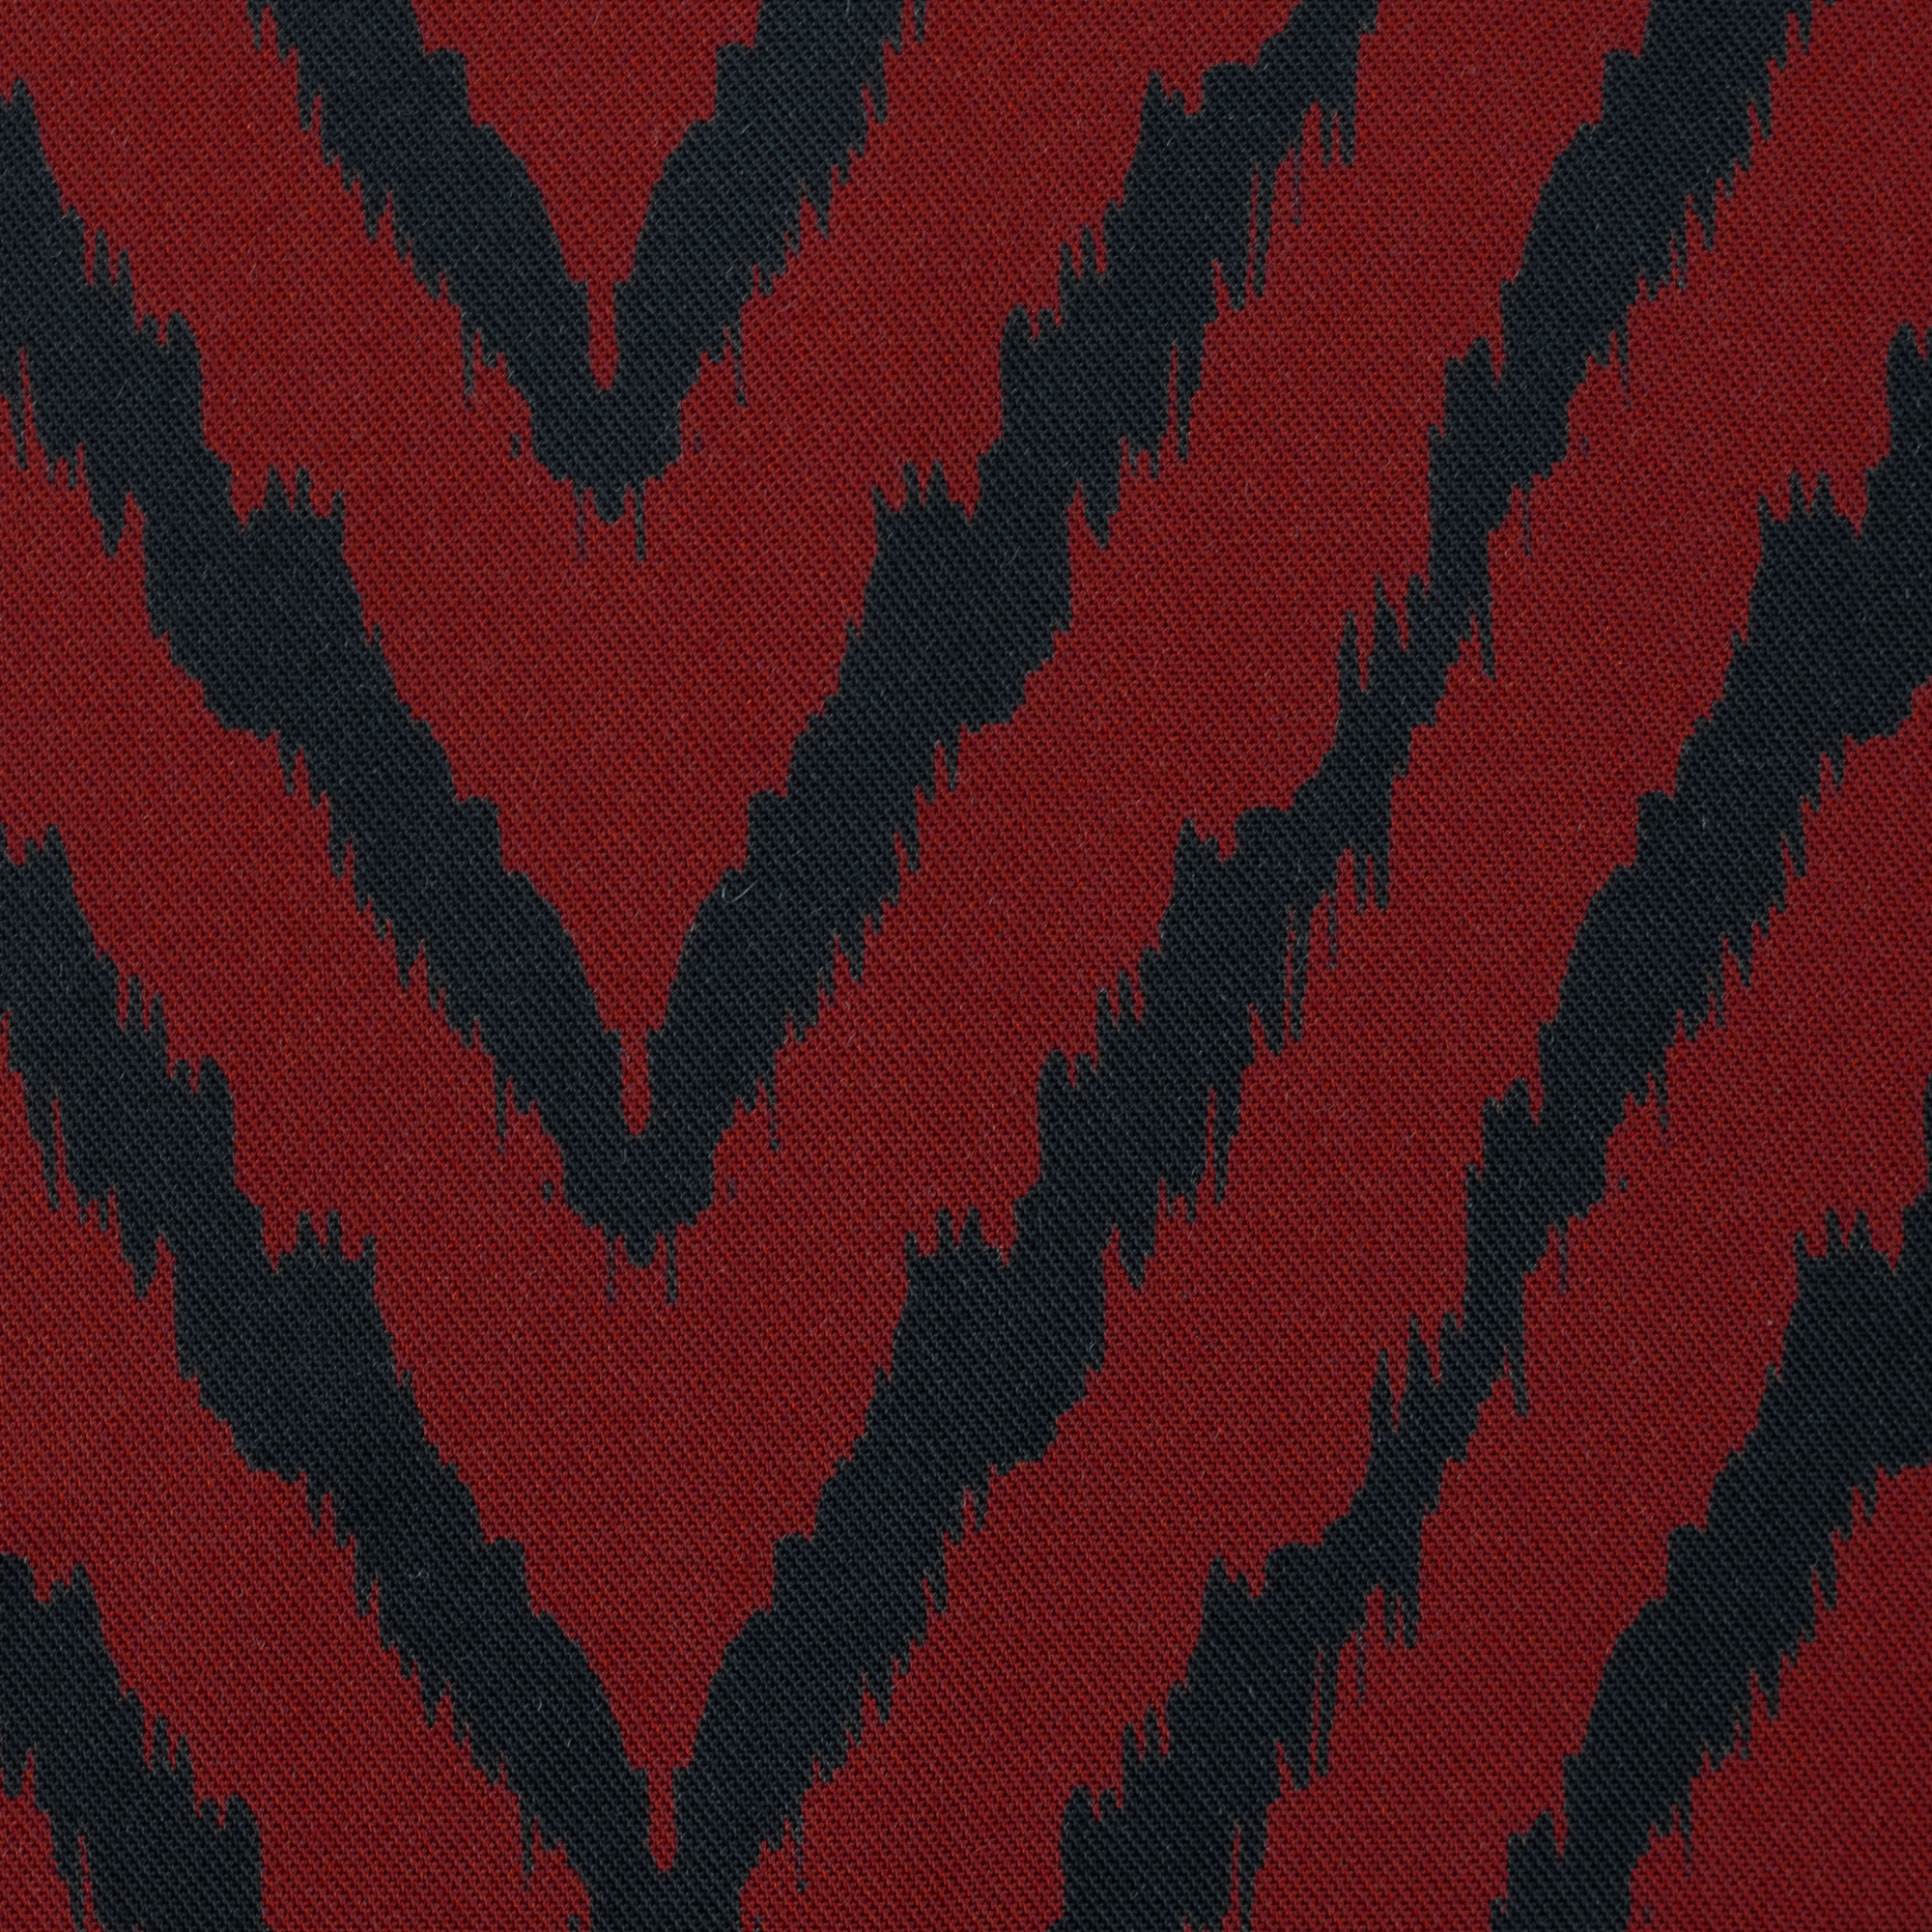 Viscose Fabric with Large Black Chevron Stripe on Dark Red